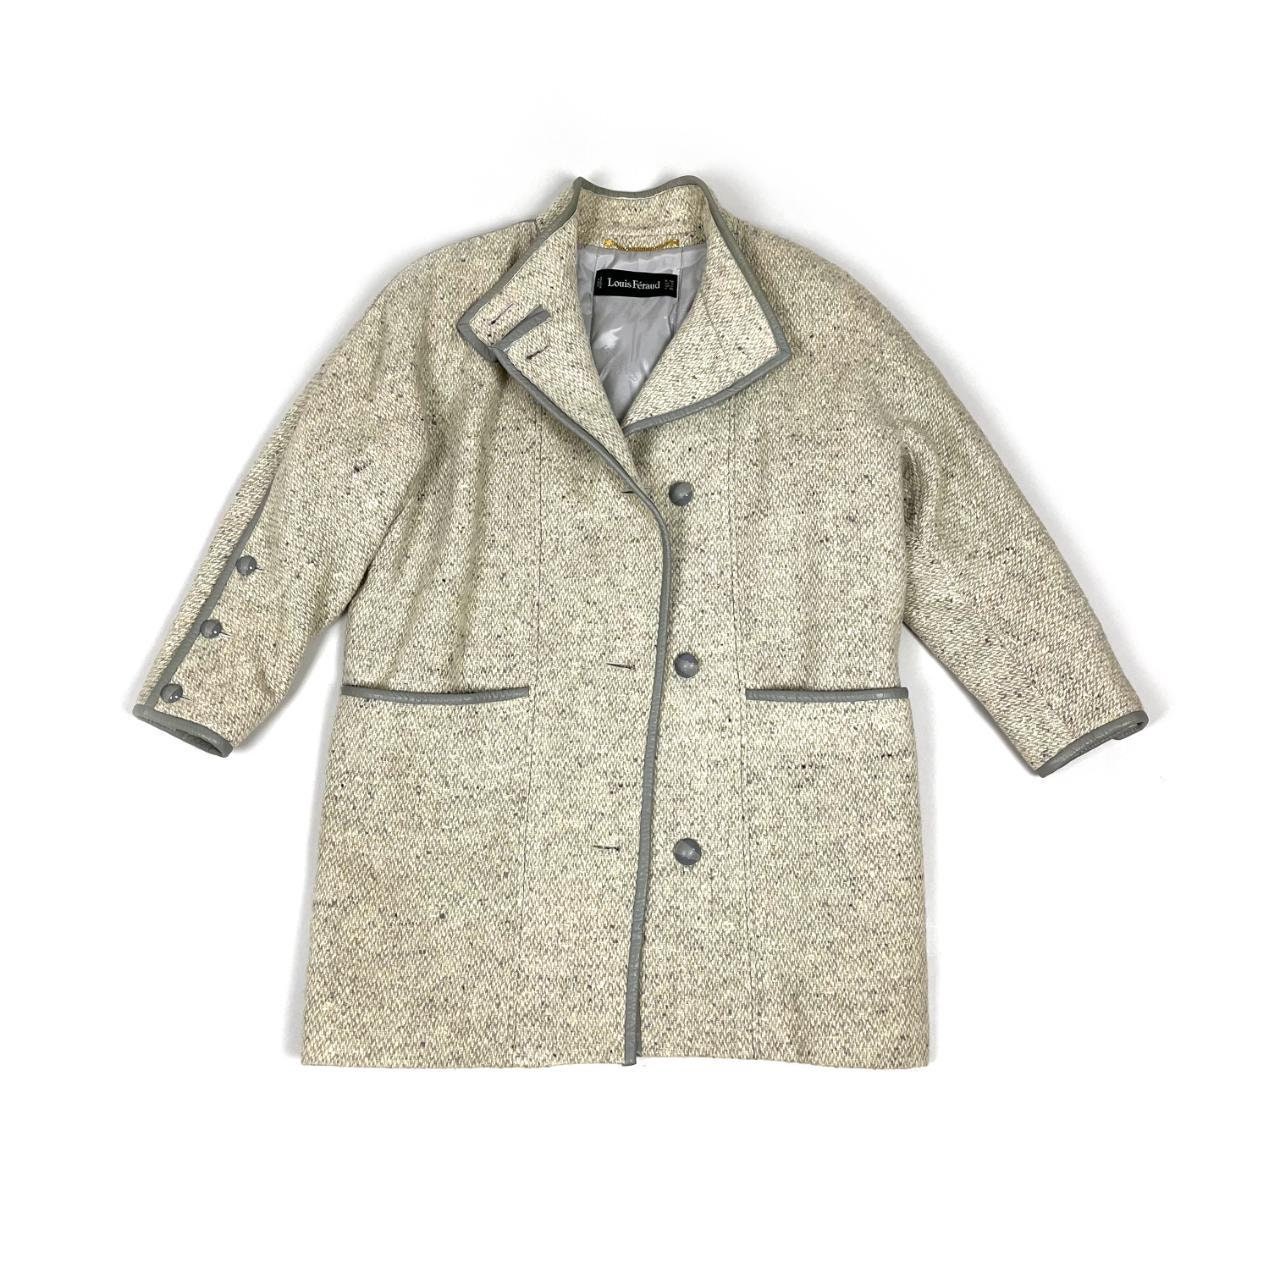 Ralph Lauren's 'smart' shirt is the ultimate preppy tech - The Verge